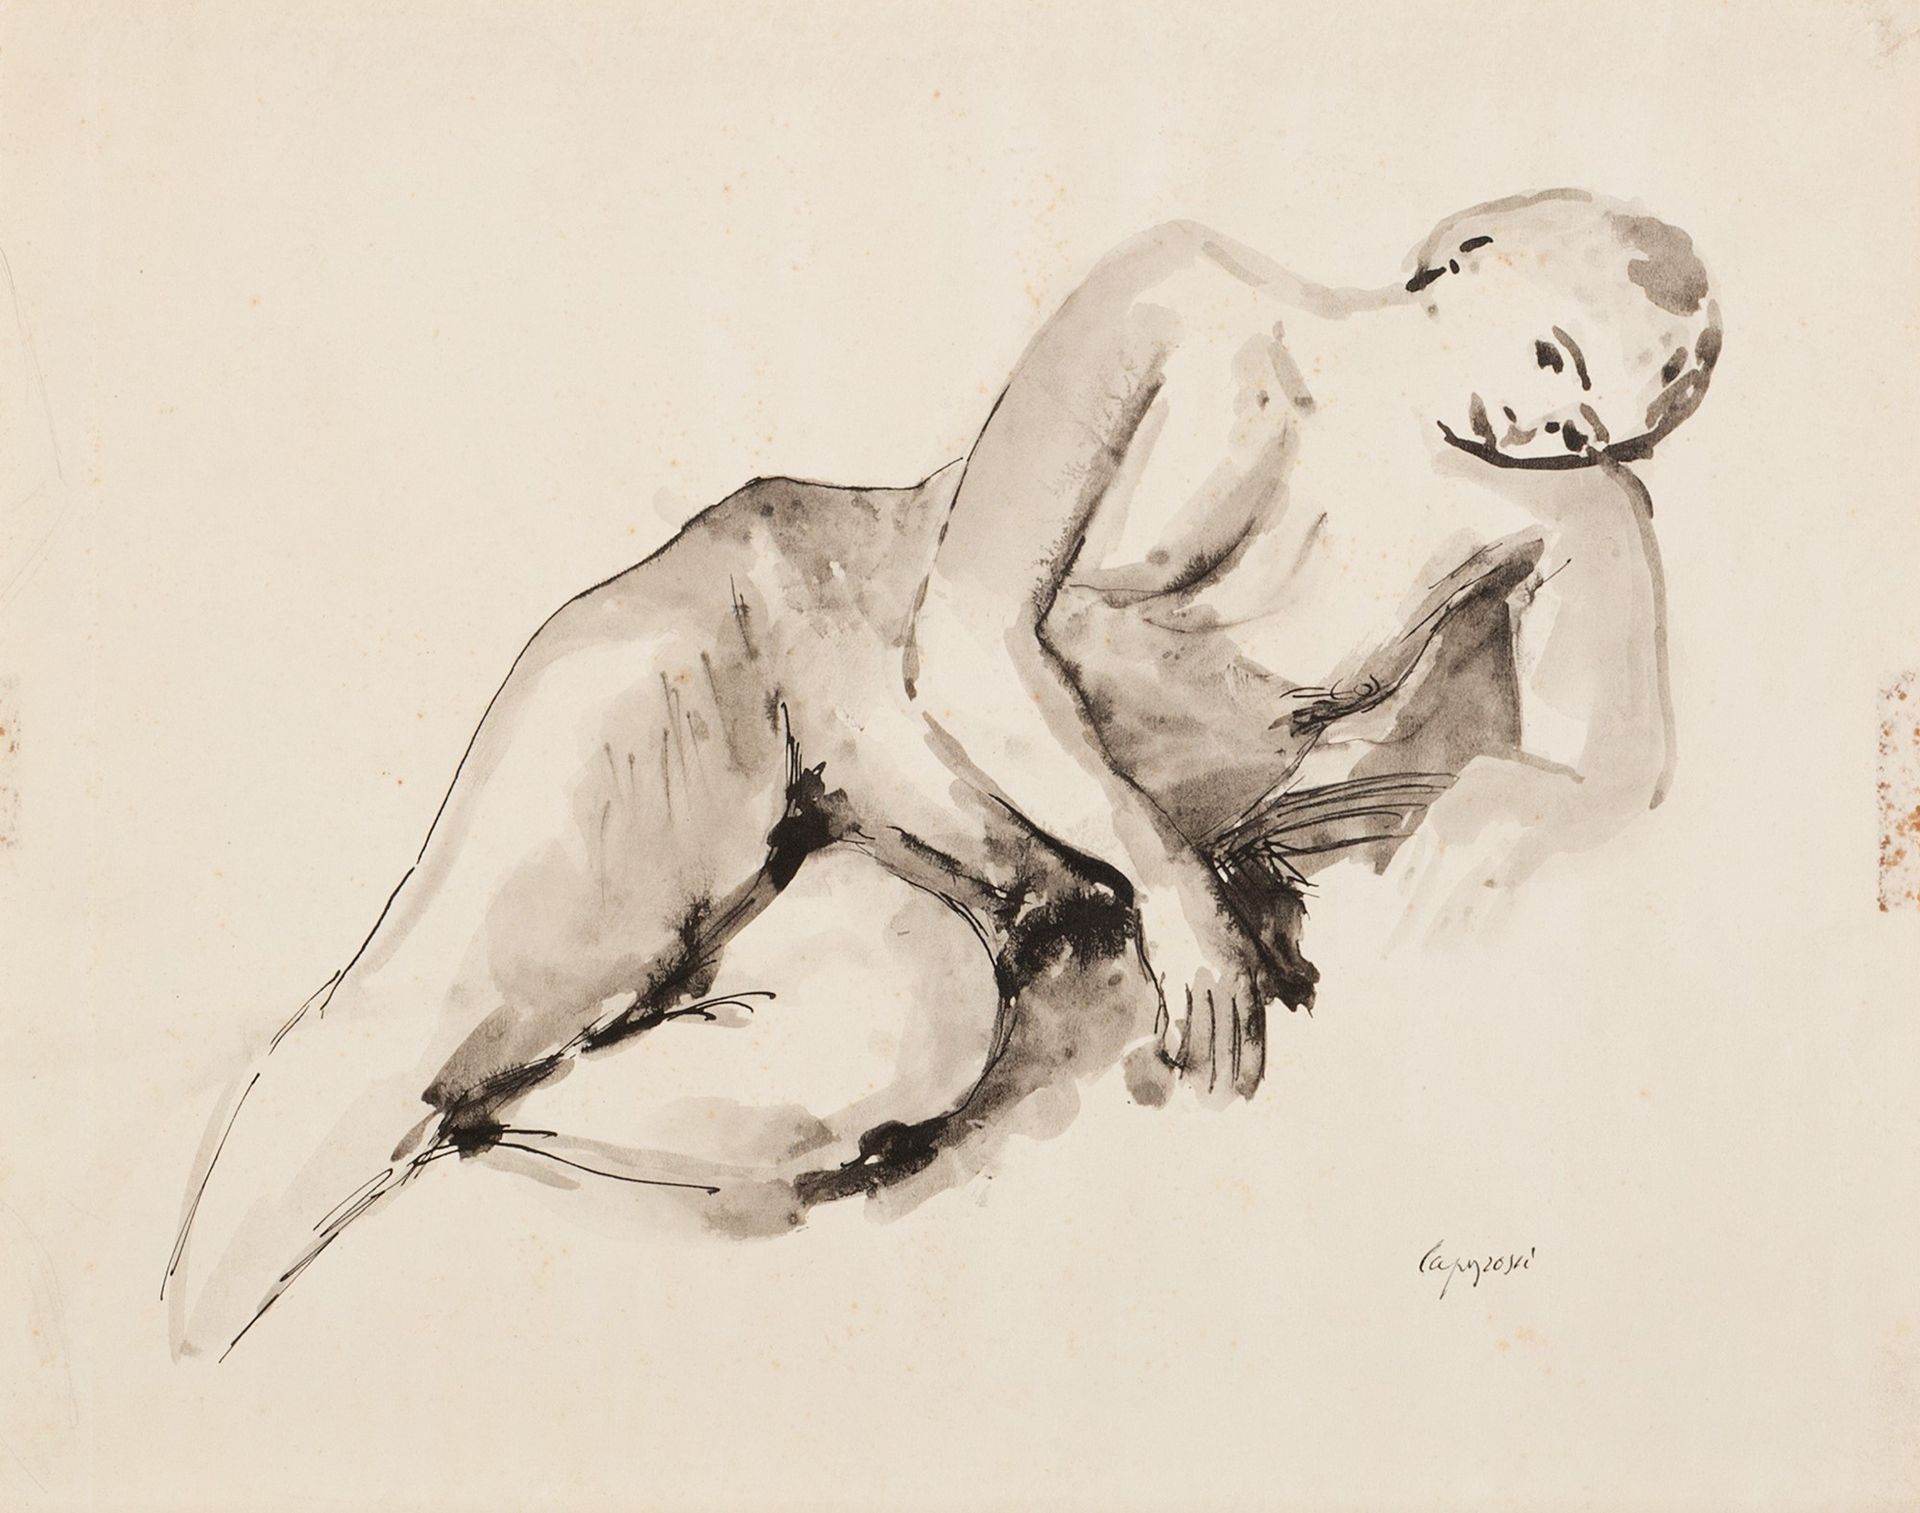 GIUSEPPE CAPOGROSSI 躺着的女性裸体，1942/'44

瓷器墨水和水彩纸
25,5 x 33,5 cm
右下方签名：Capogrossi

&hellip;